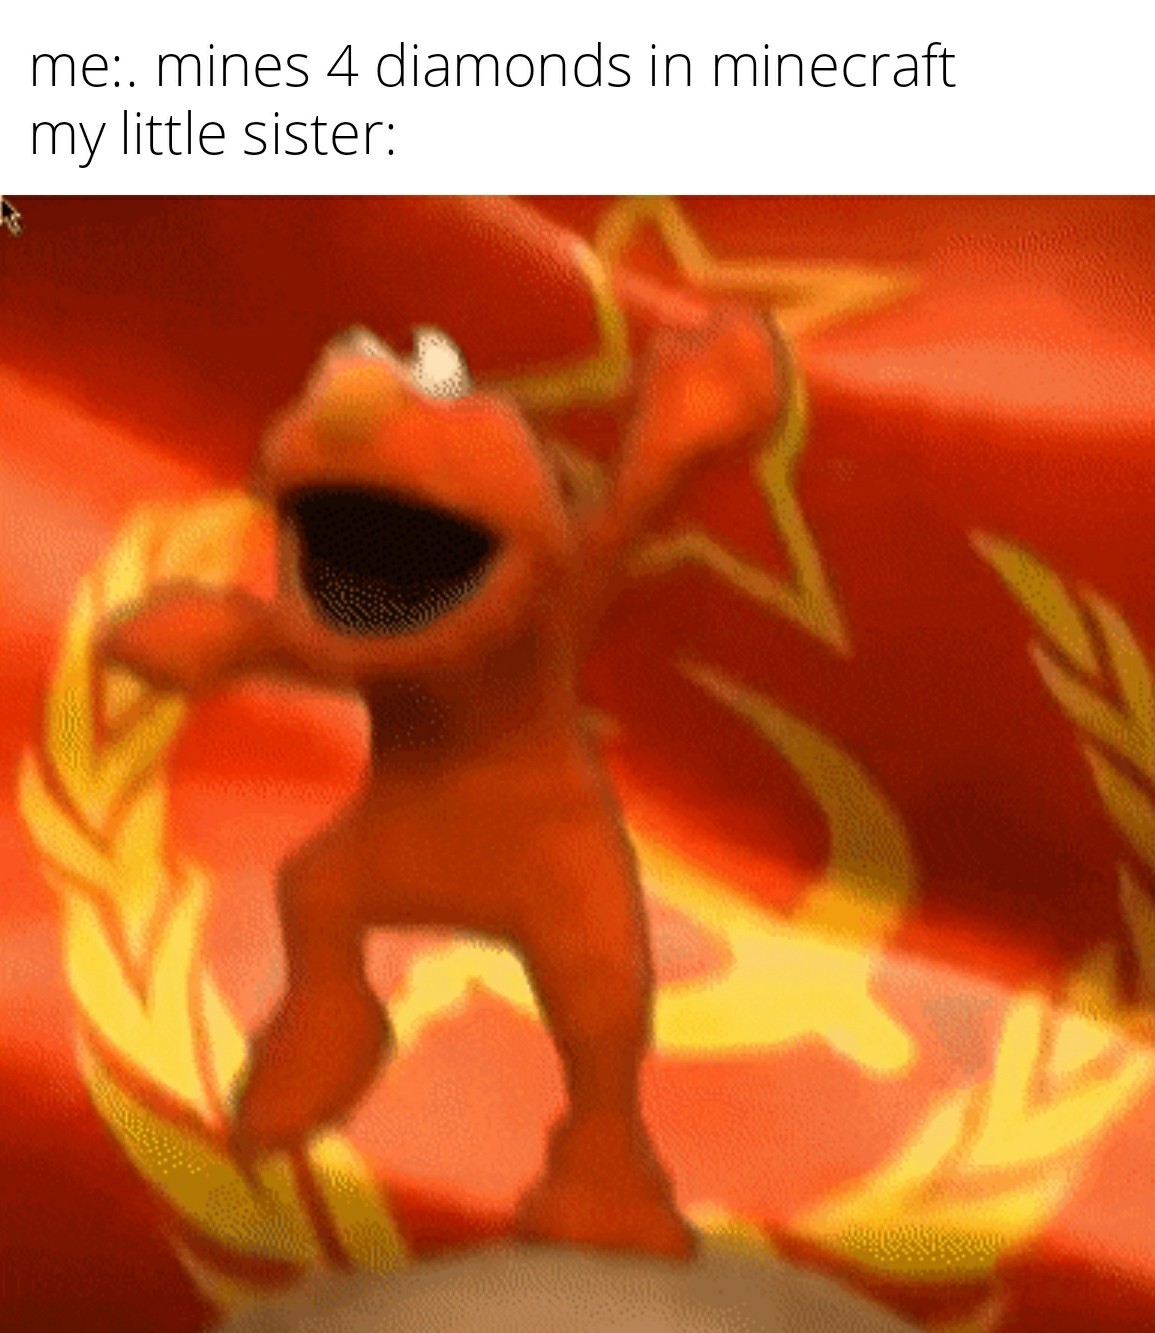 Communist elmo - meme